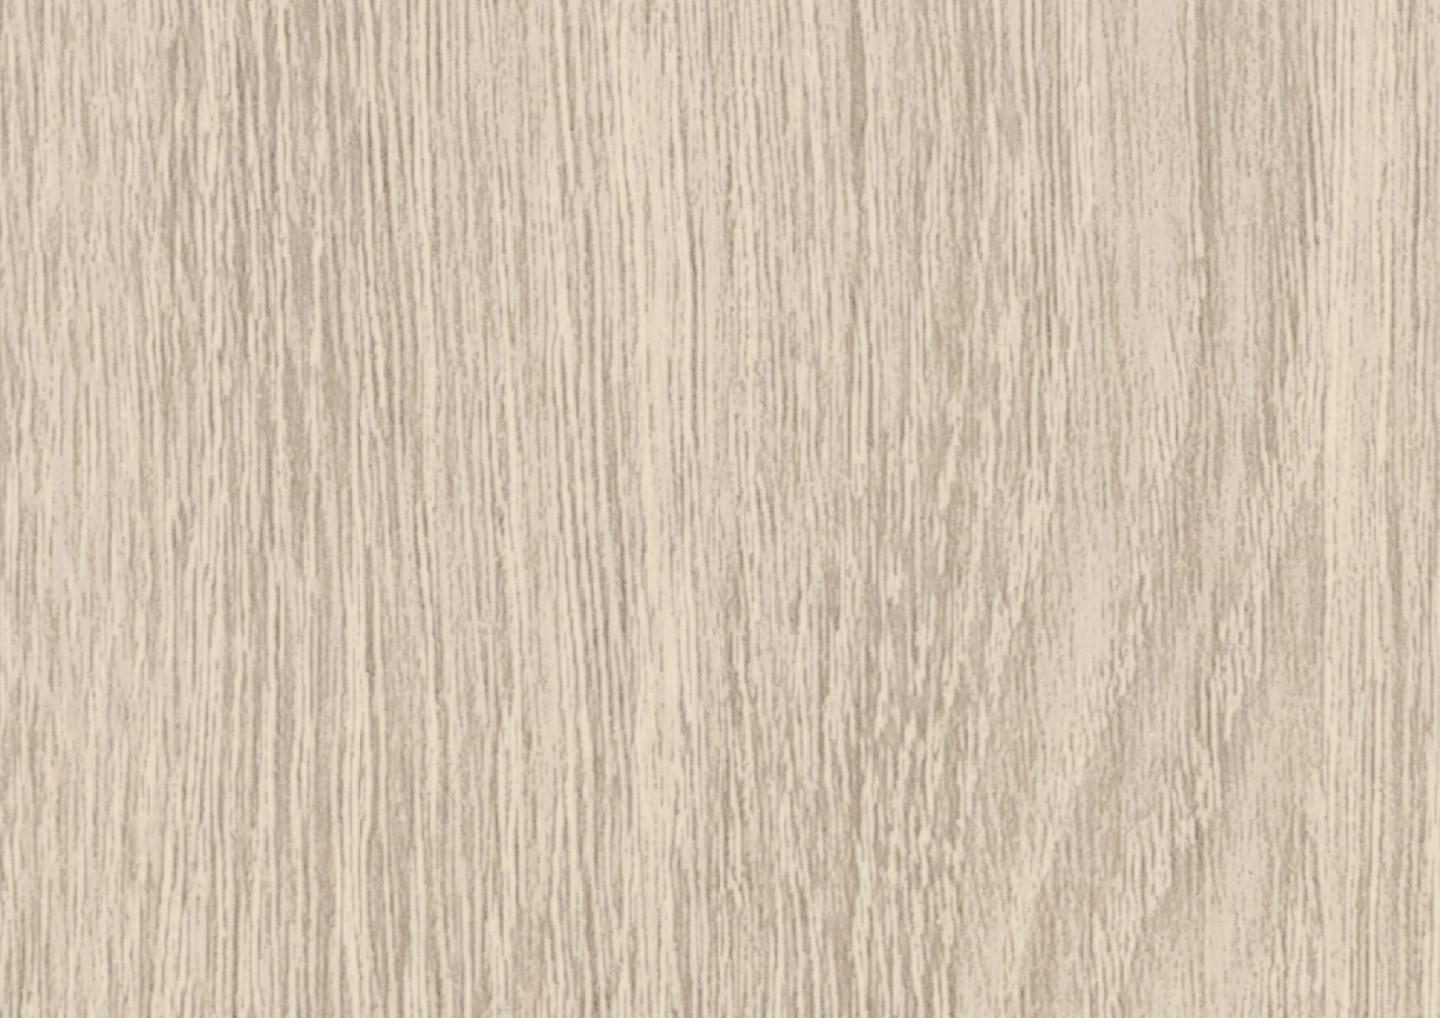 Verbundwerkstoff-PVC - White Oak Color Options